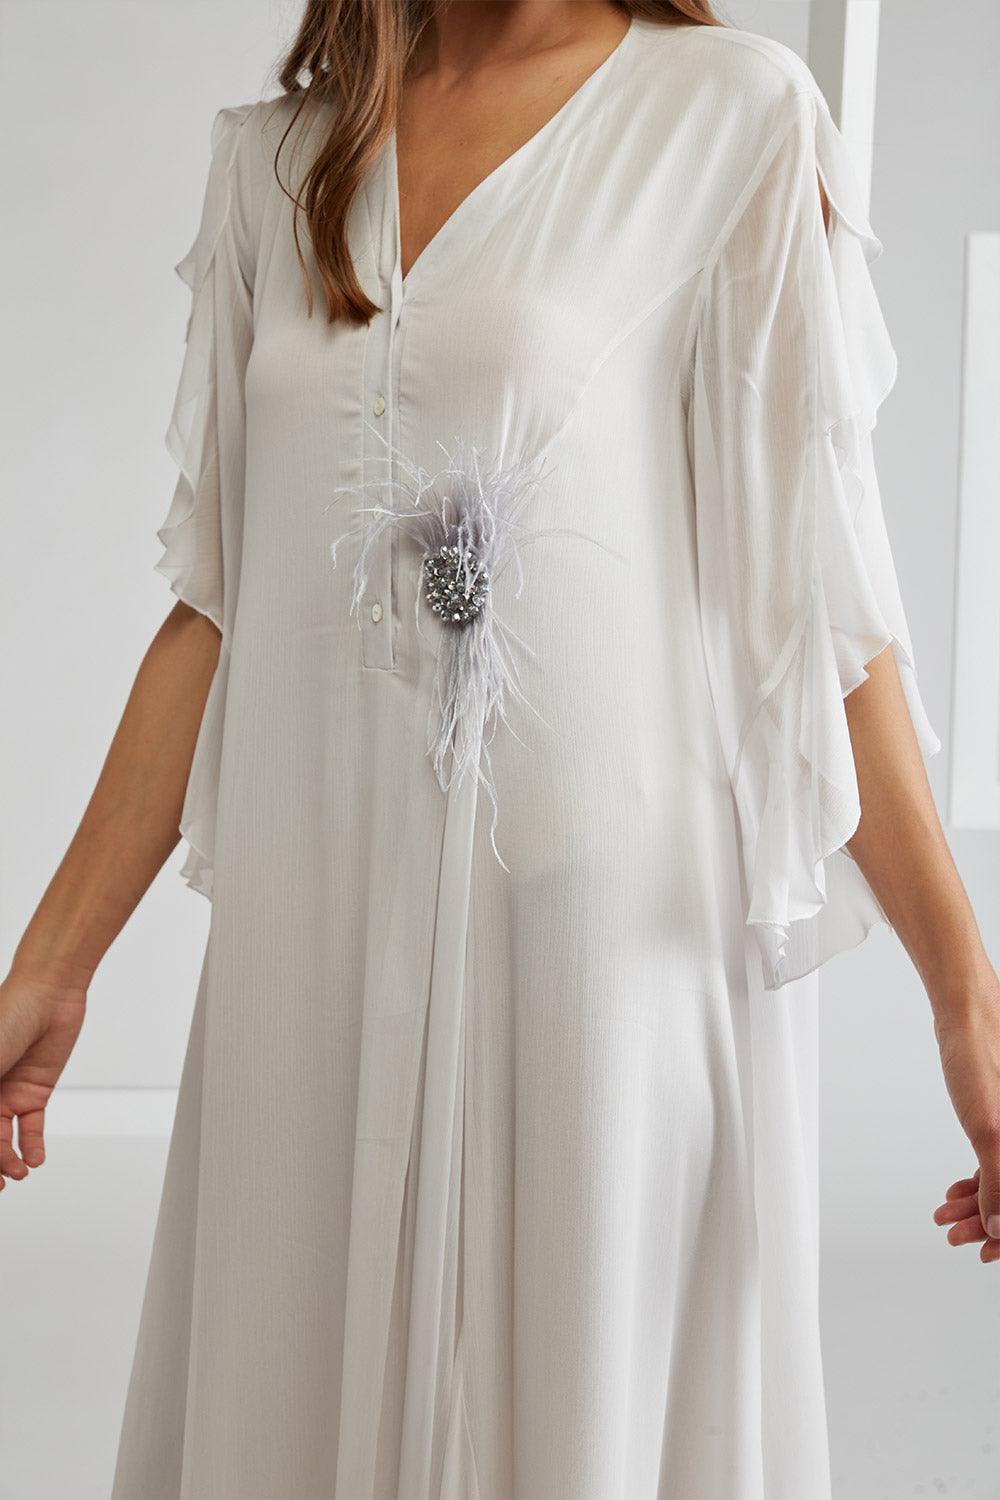 Silk Chiffon Dress Off White - Furry Pin - Bocan